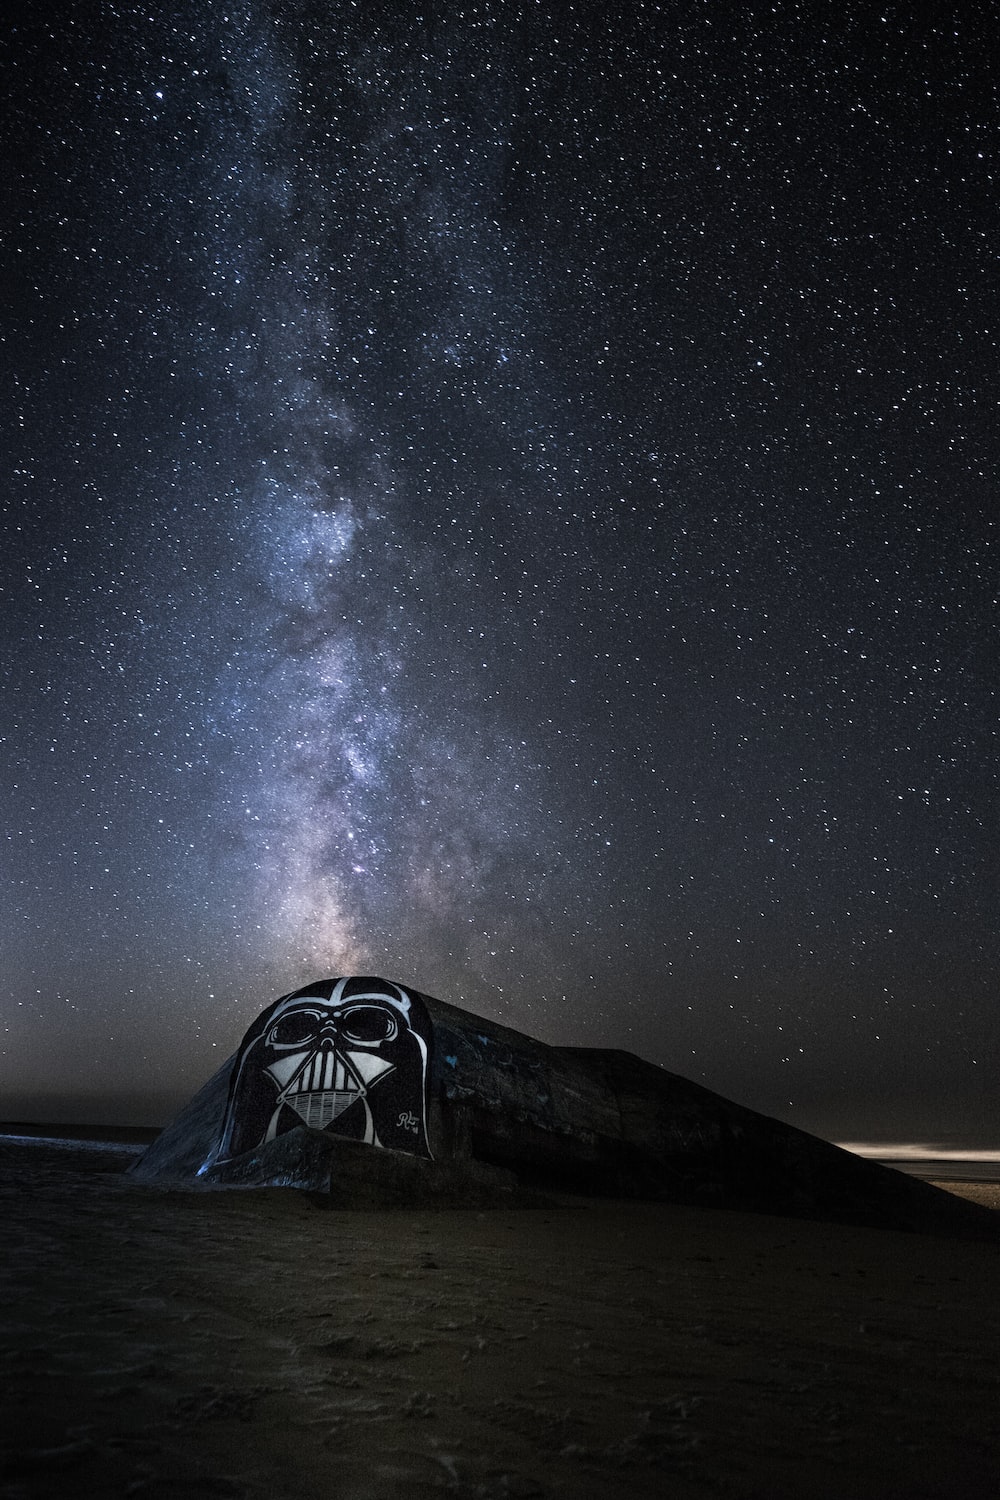 Star Wars Darth Vader Digital Wallpaper Photo Grey Image On